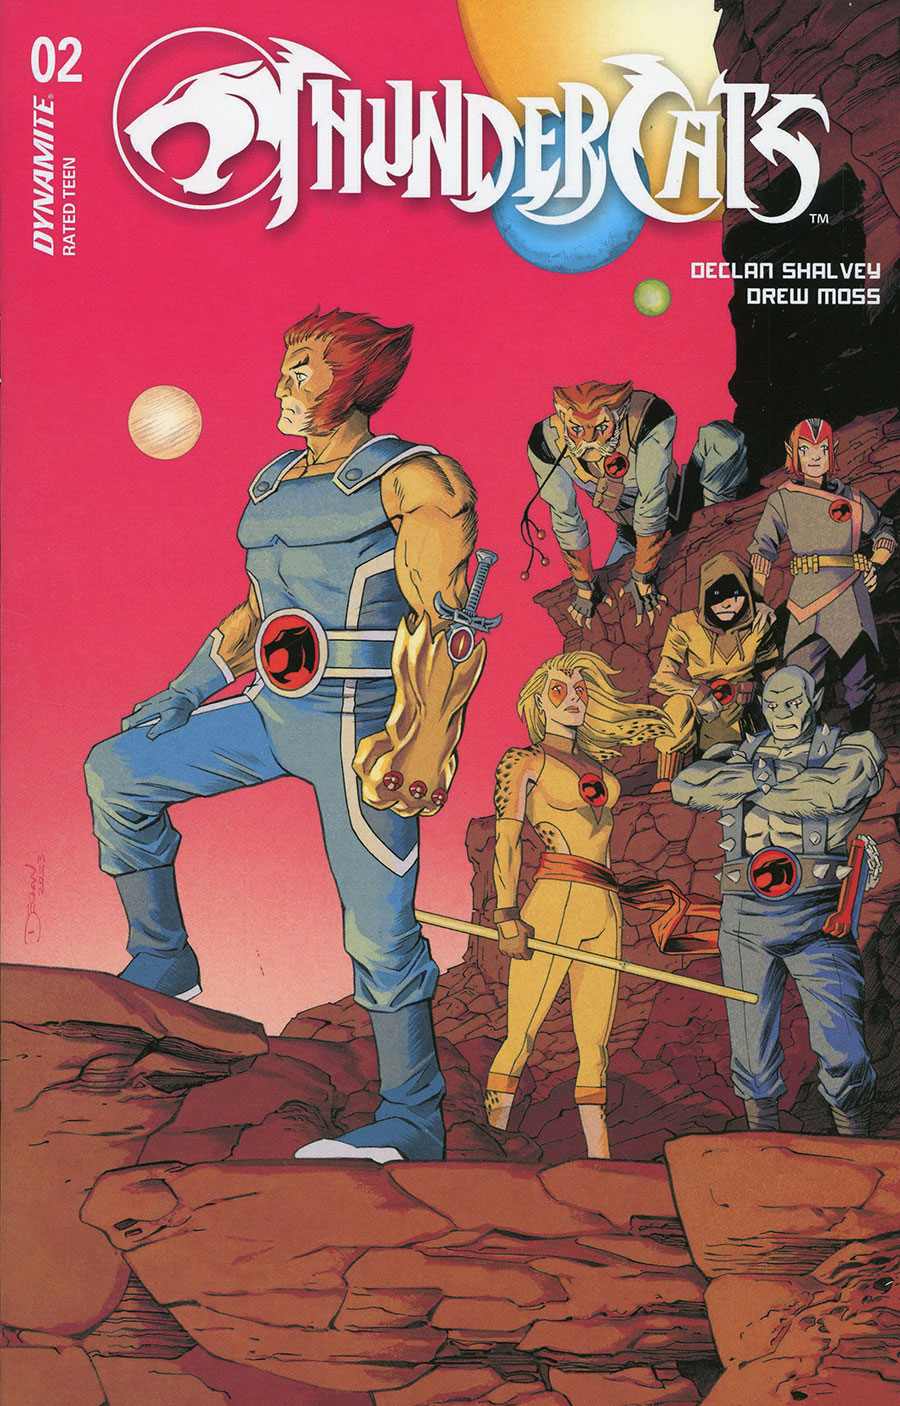 Thundercats Vol 3 #2 Cover C Variant Declan Shalvey Cover